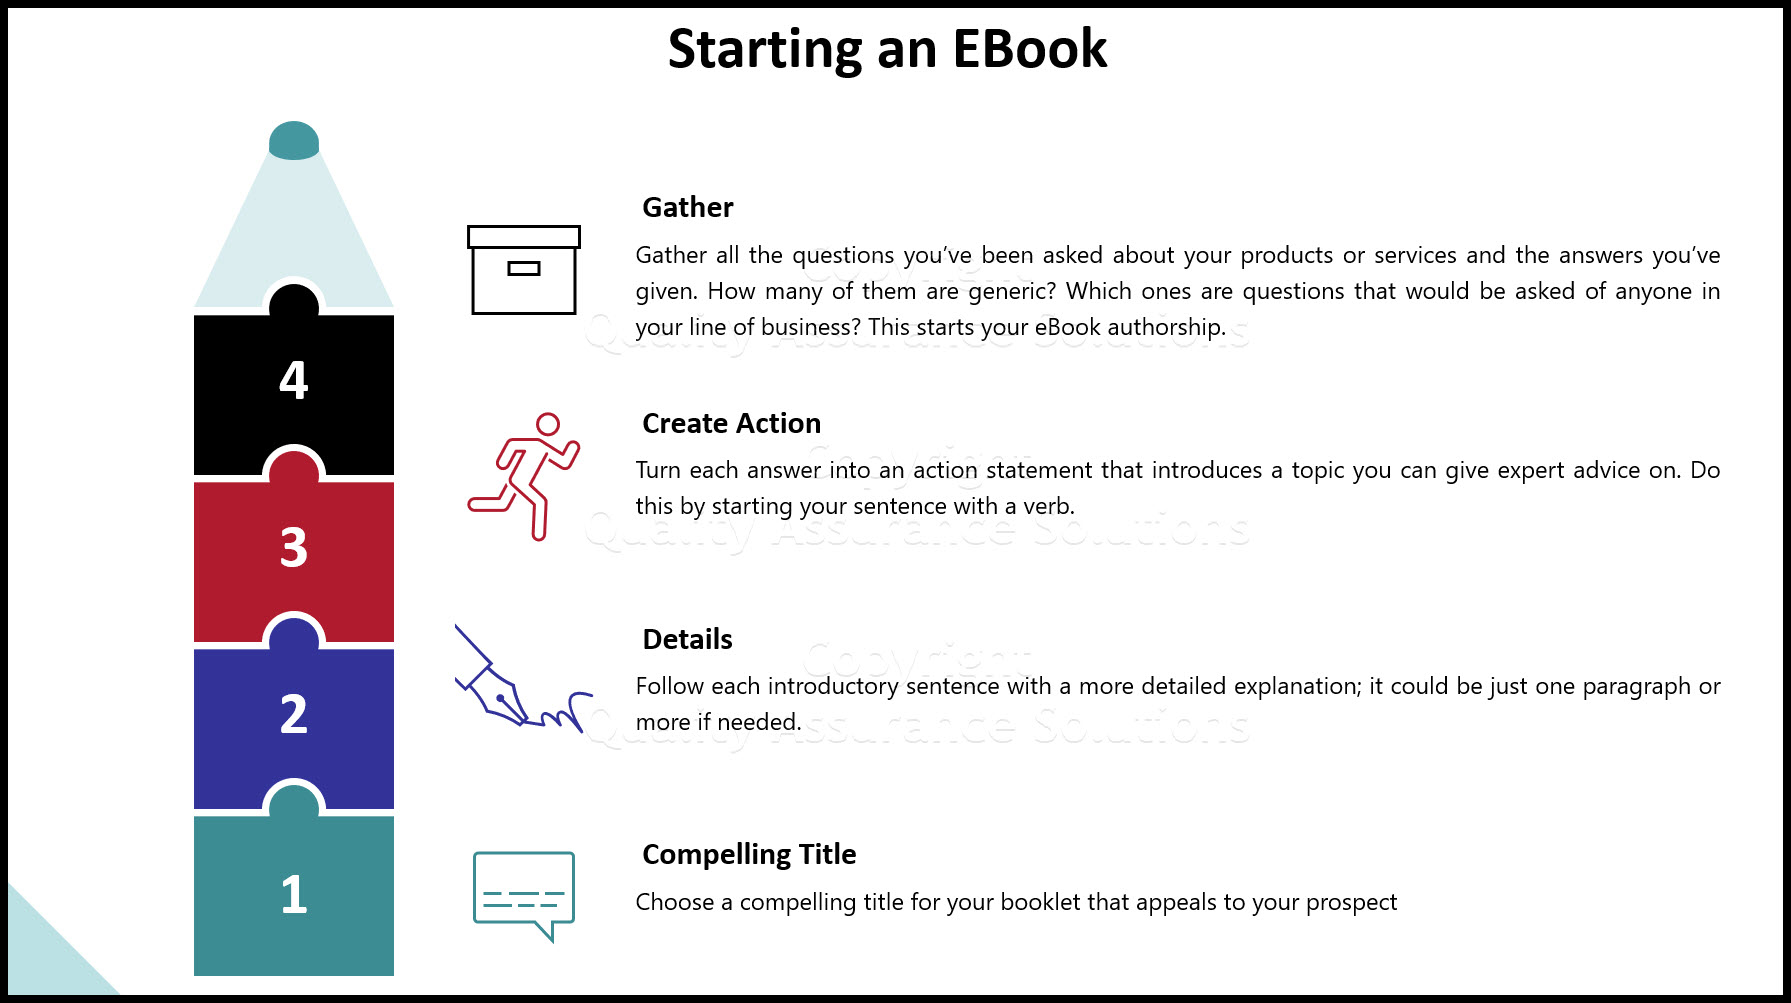 ebook authorship business slide